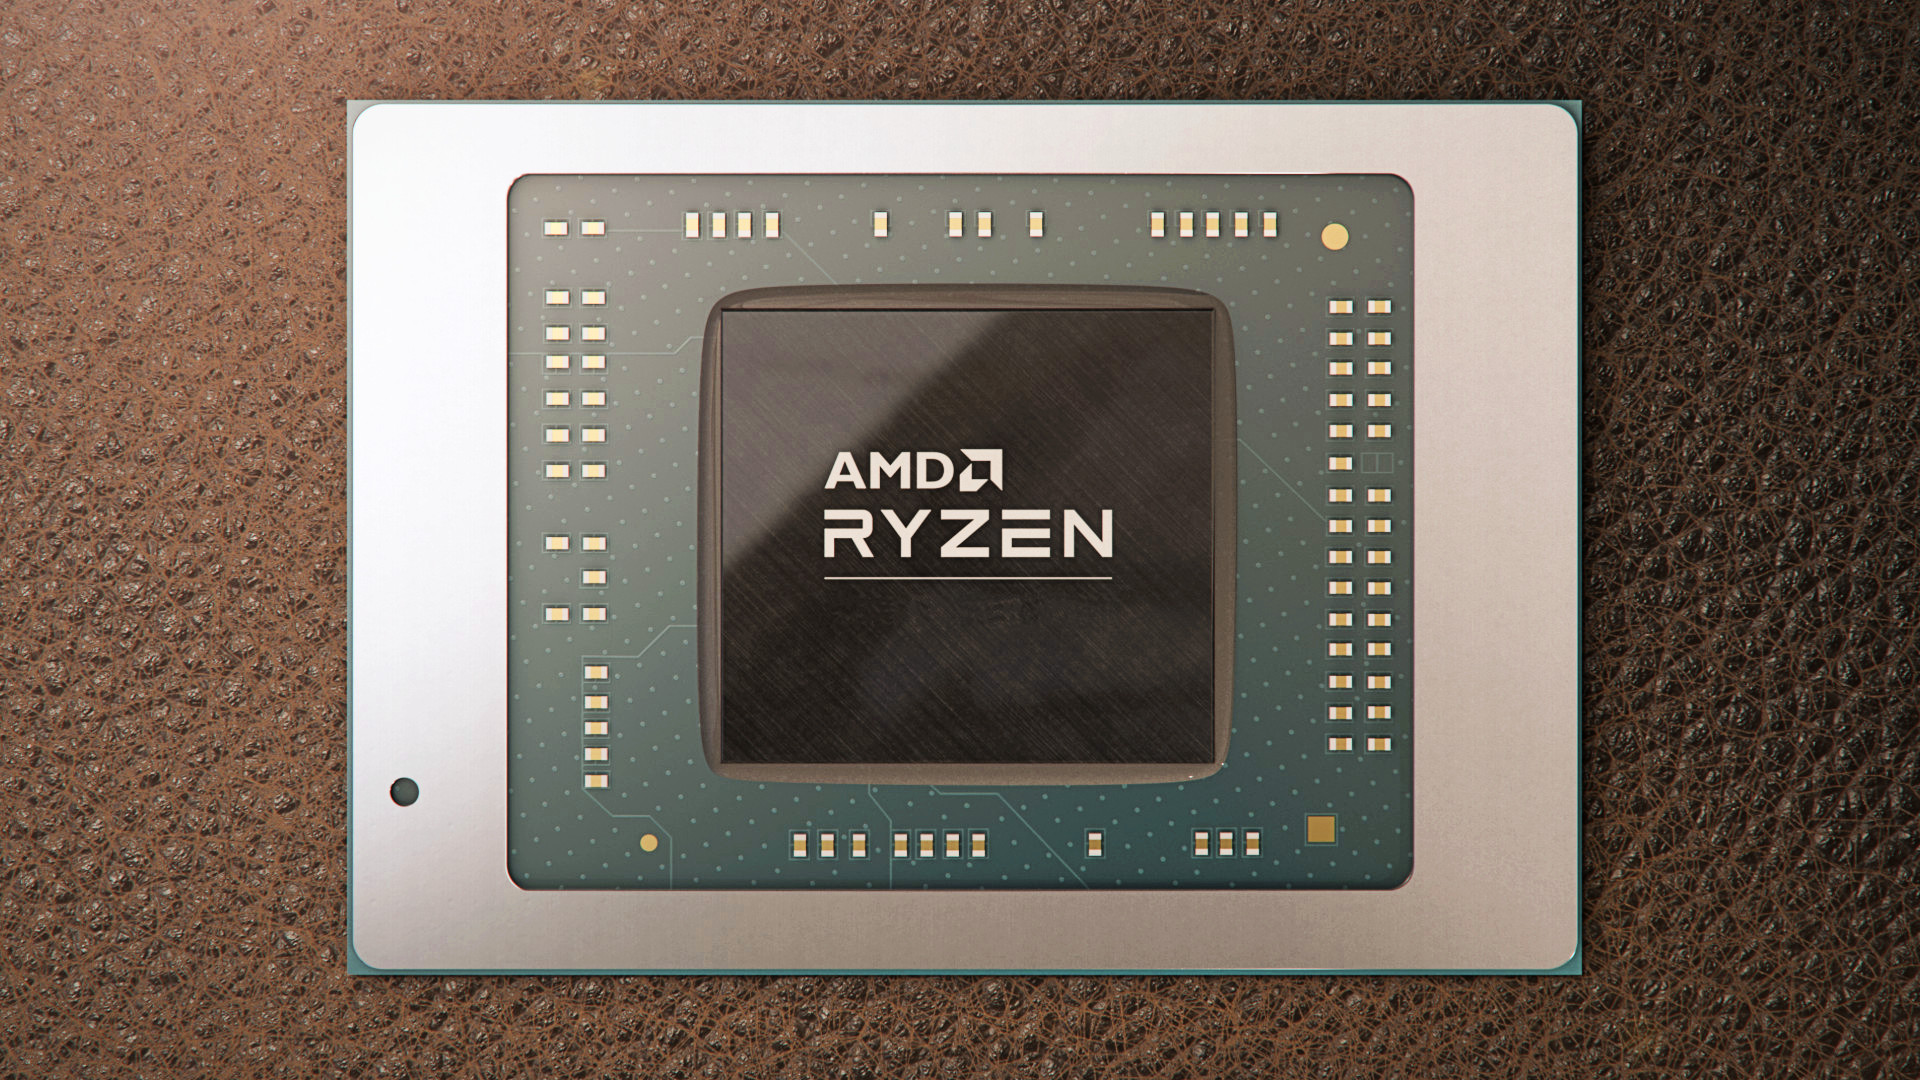 AMD announces 'Dragon Range' Ryzen CPUs for gaming laptops